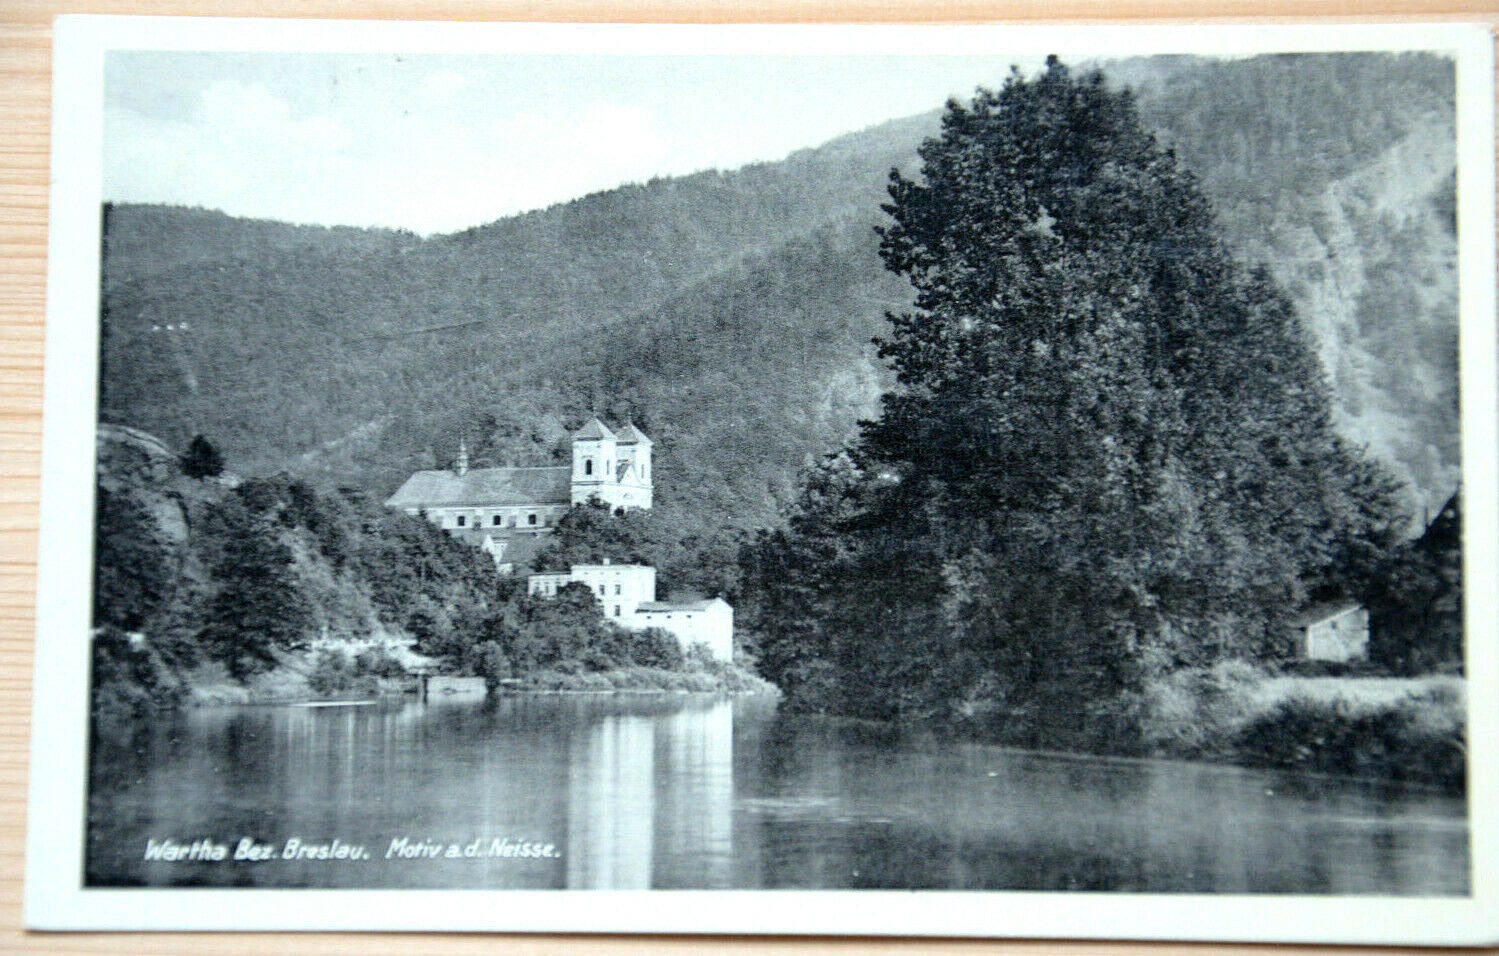 41325 Ak Schlesien Wartha District Breslau Motif on The Neisse To 1937 Lake